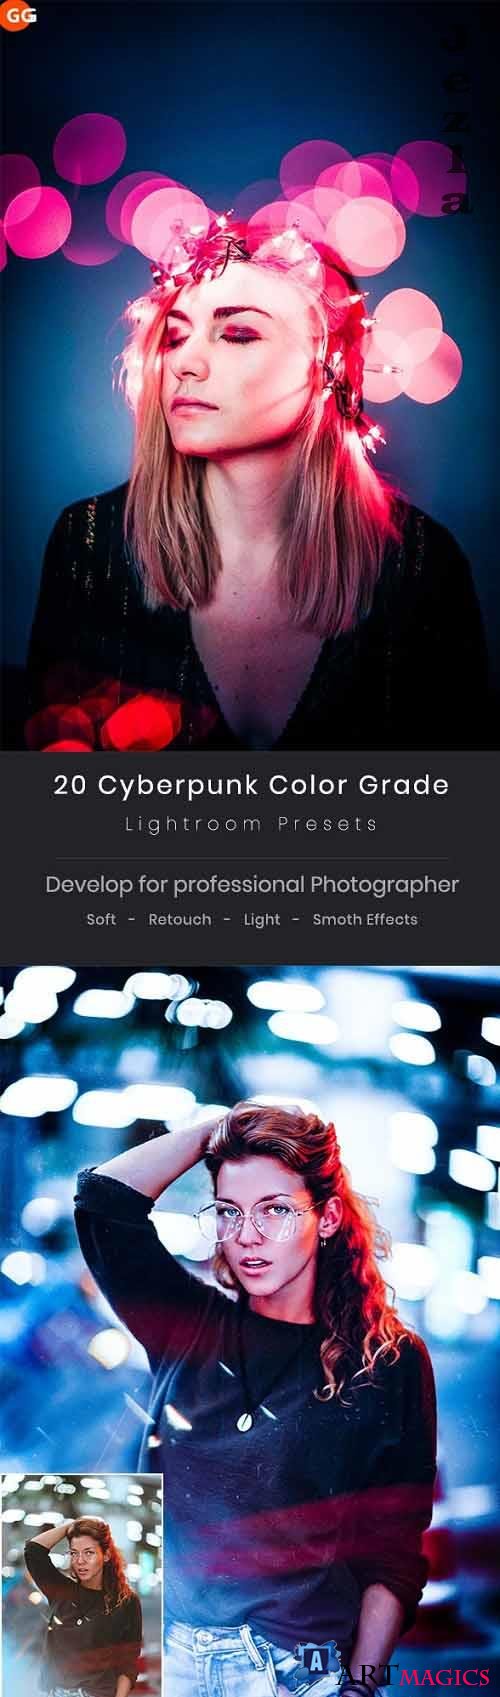 20 Cyberpunk Color Grade Lightroom Presets - 35394195